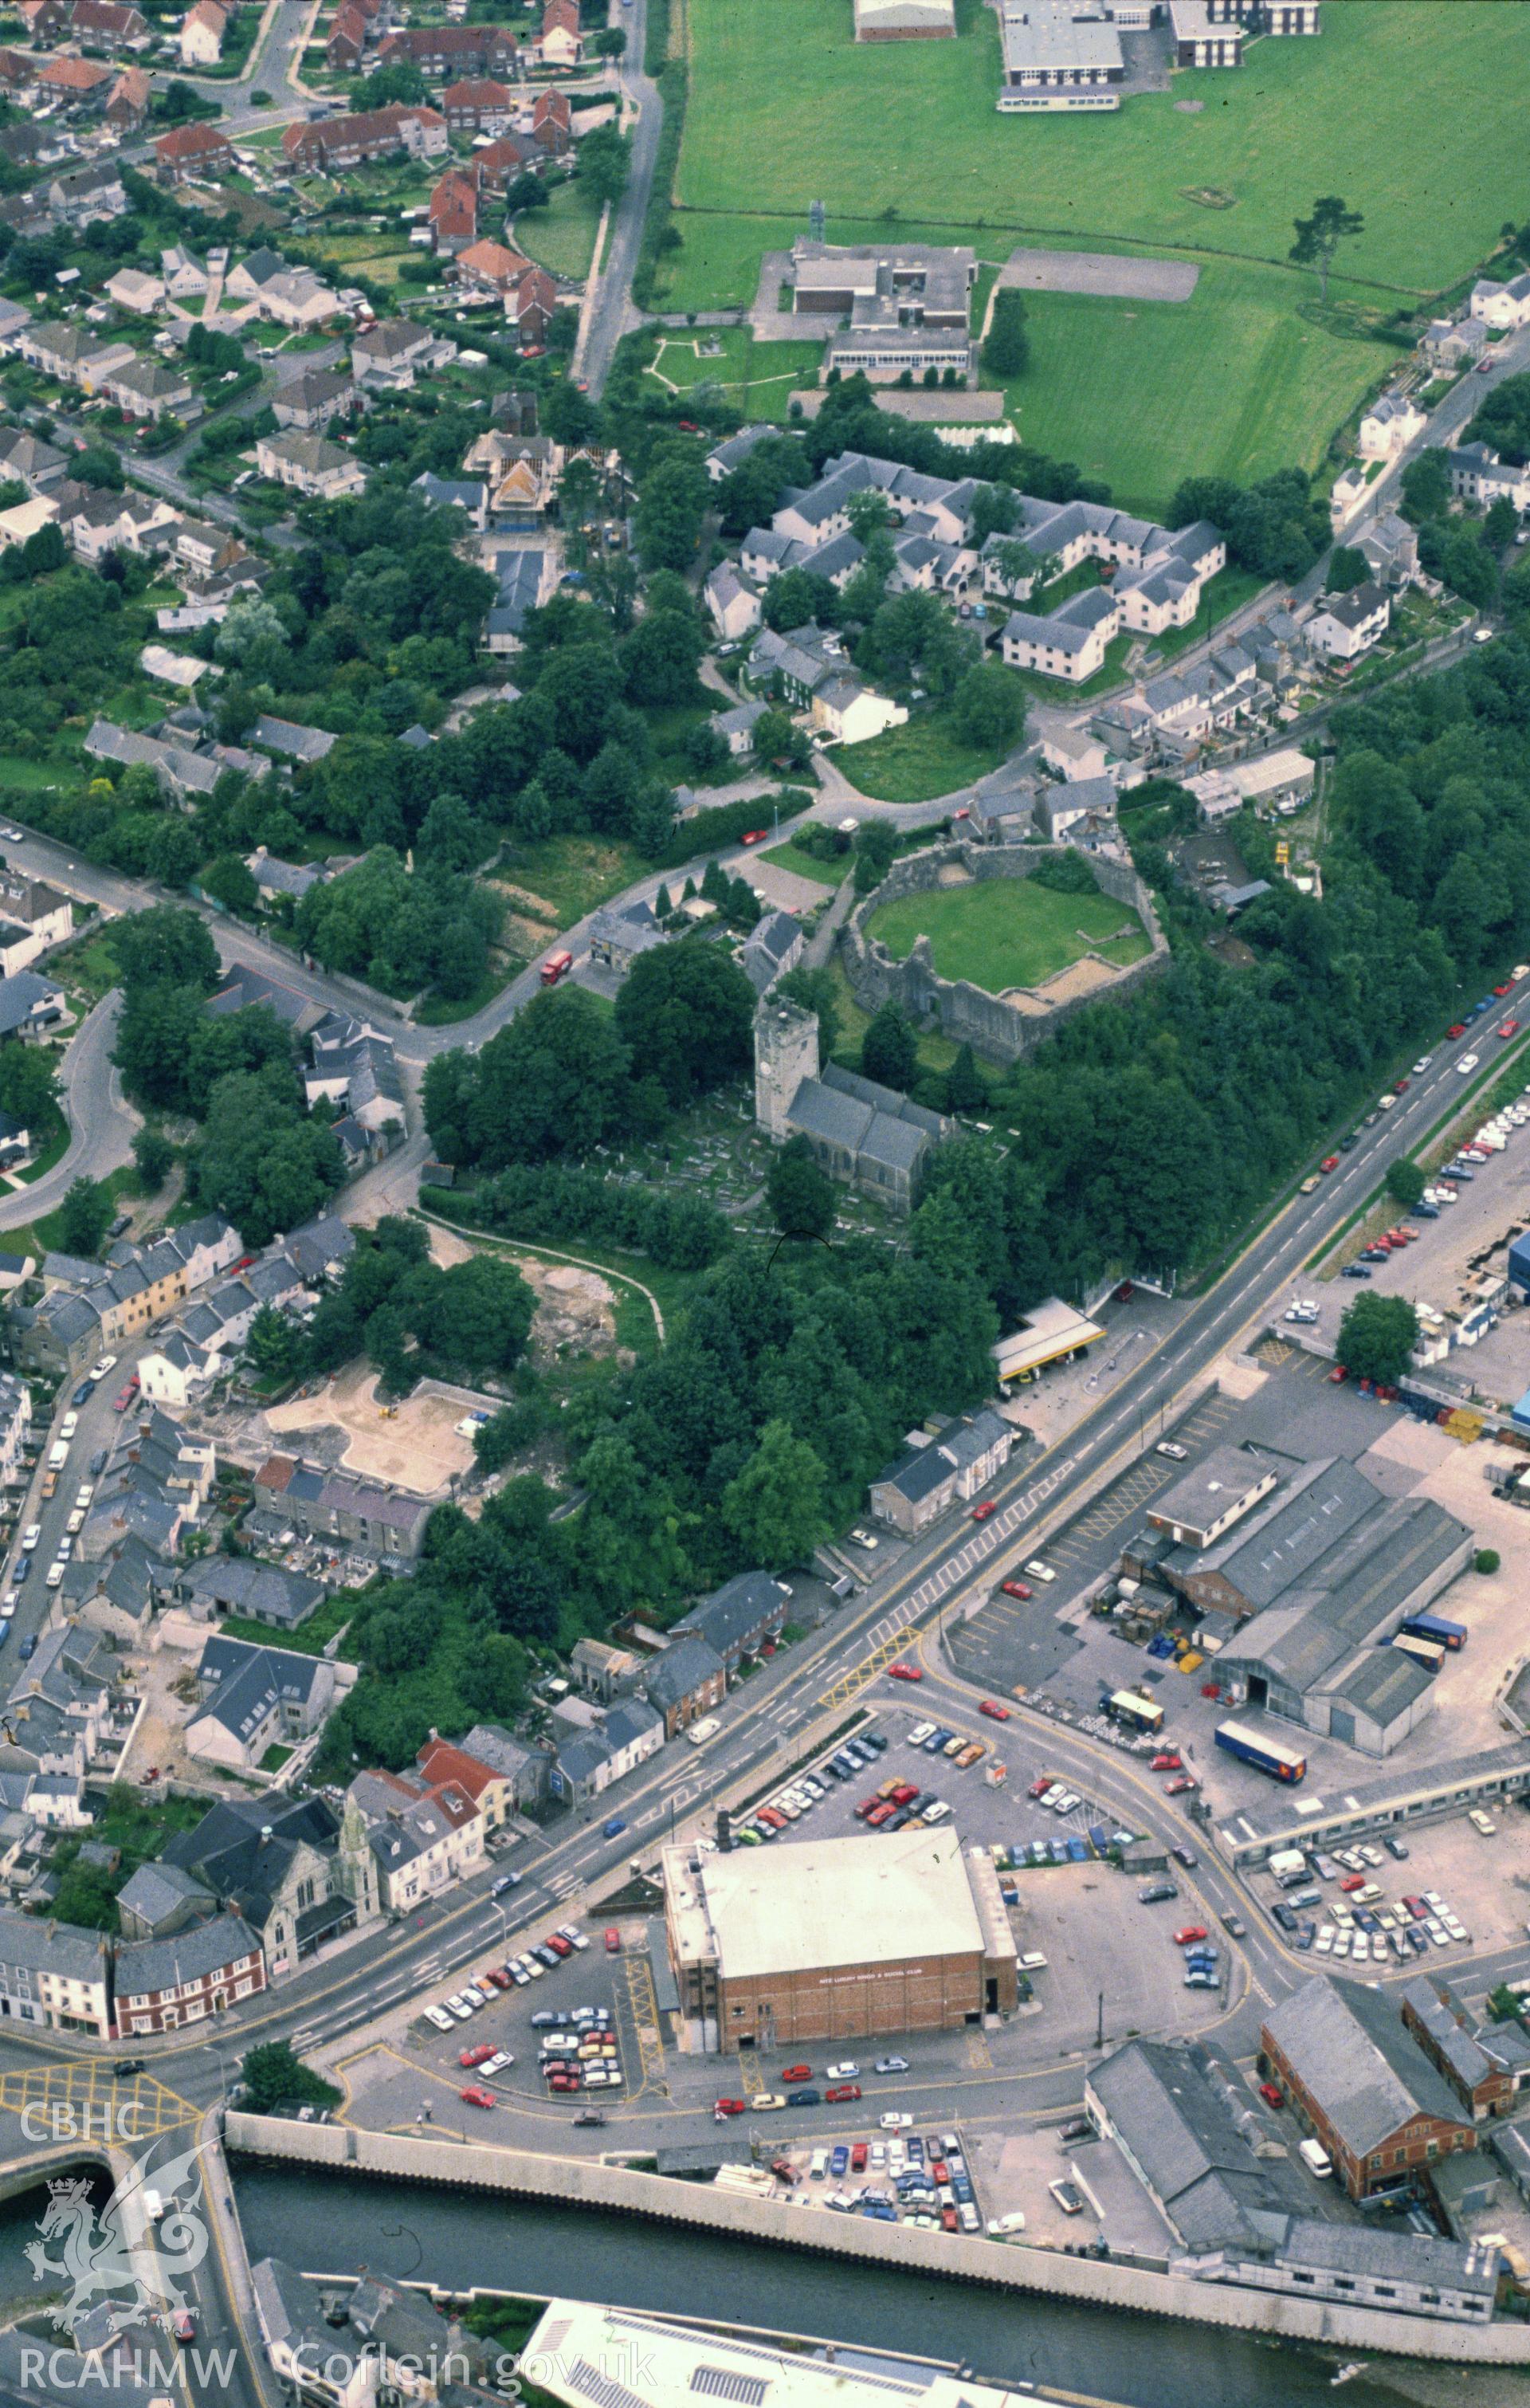 Slide of RCAHMW colour oblique aerial photograph of Newcastle Castle, taken by C.R. Musson, 12/2/1988.